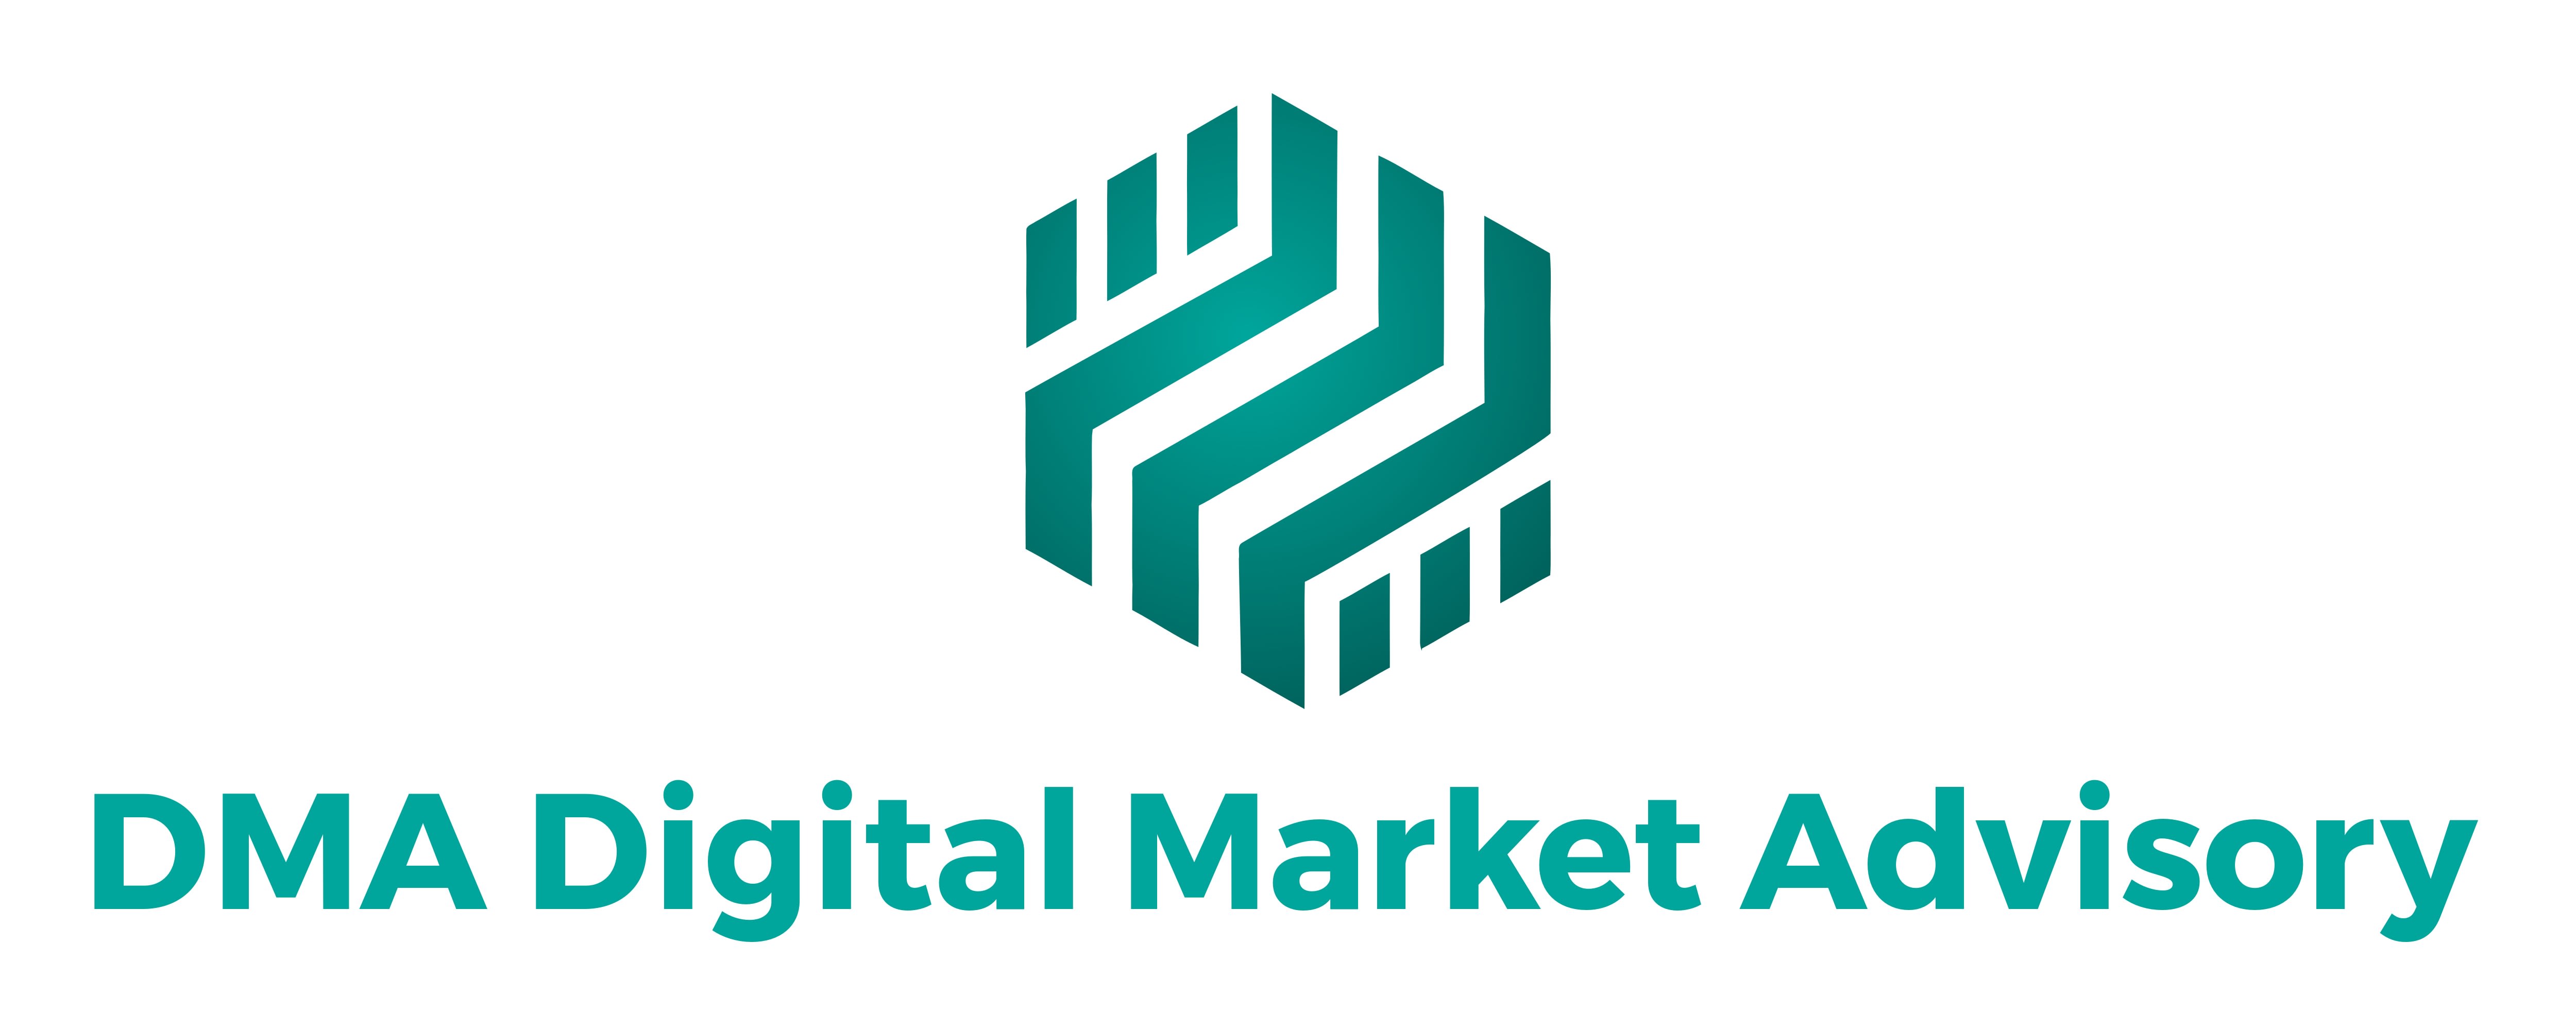 DMA Digital Market Advisory